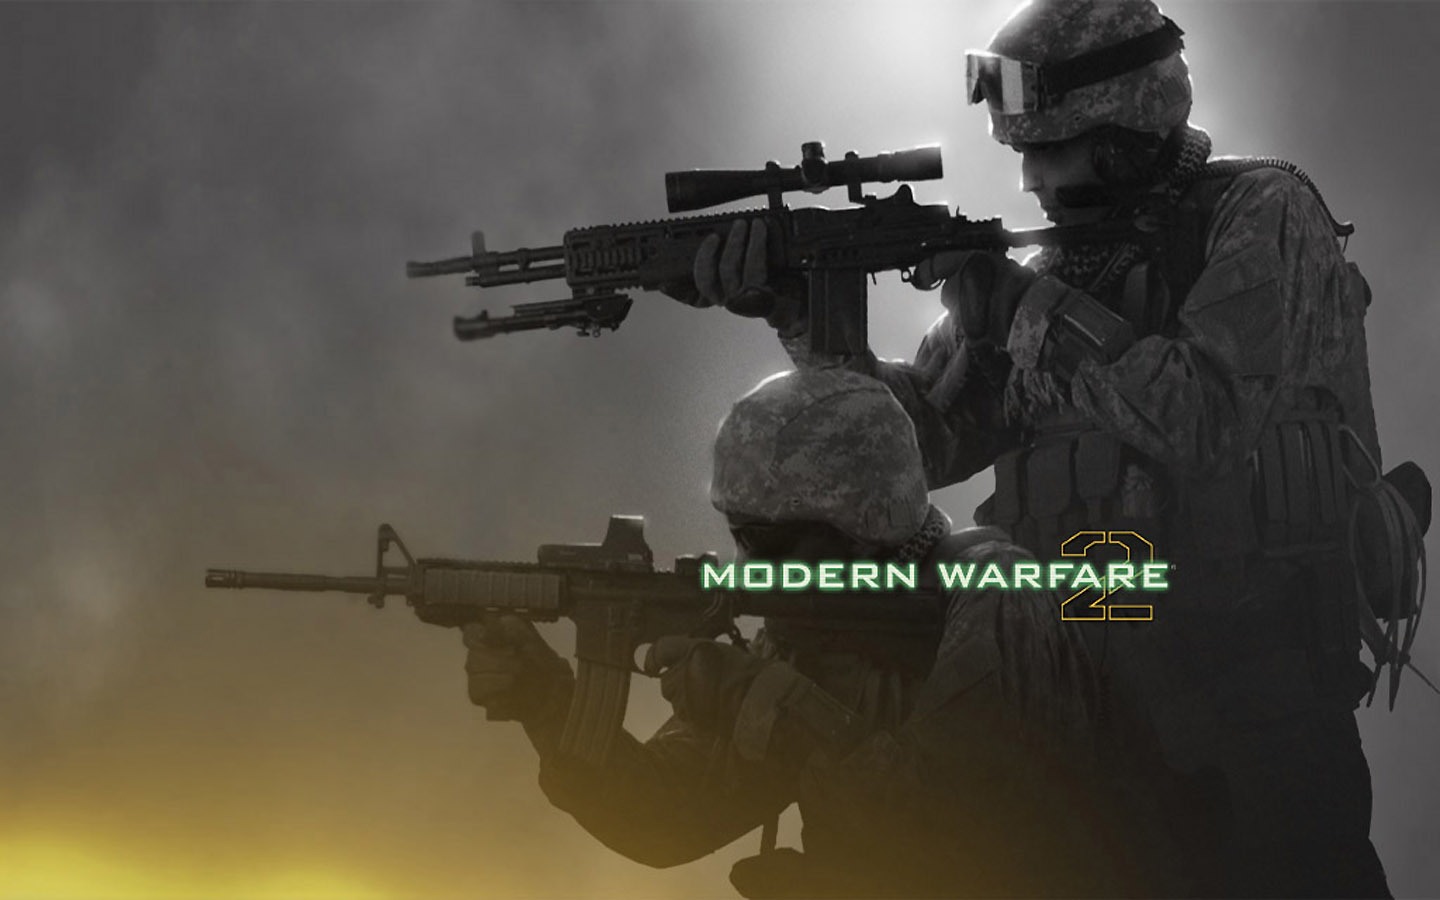 1519481 descargar imagen call of duty: modern warfare 2, videojuego: fondos de pantalla y protectores de pantalla gratis